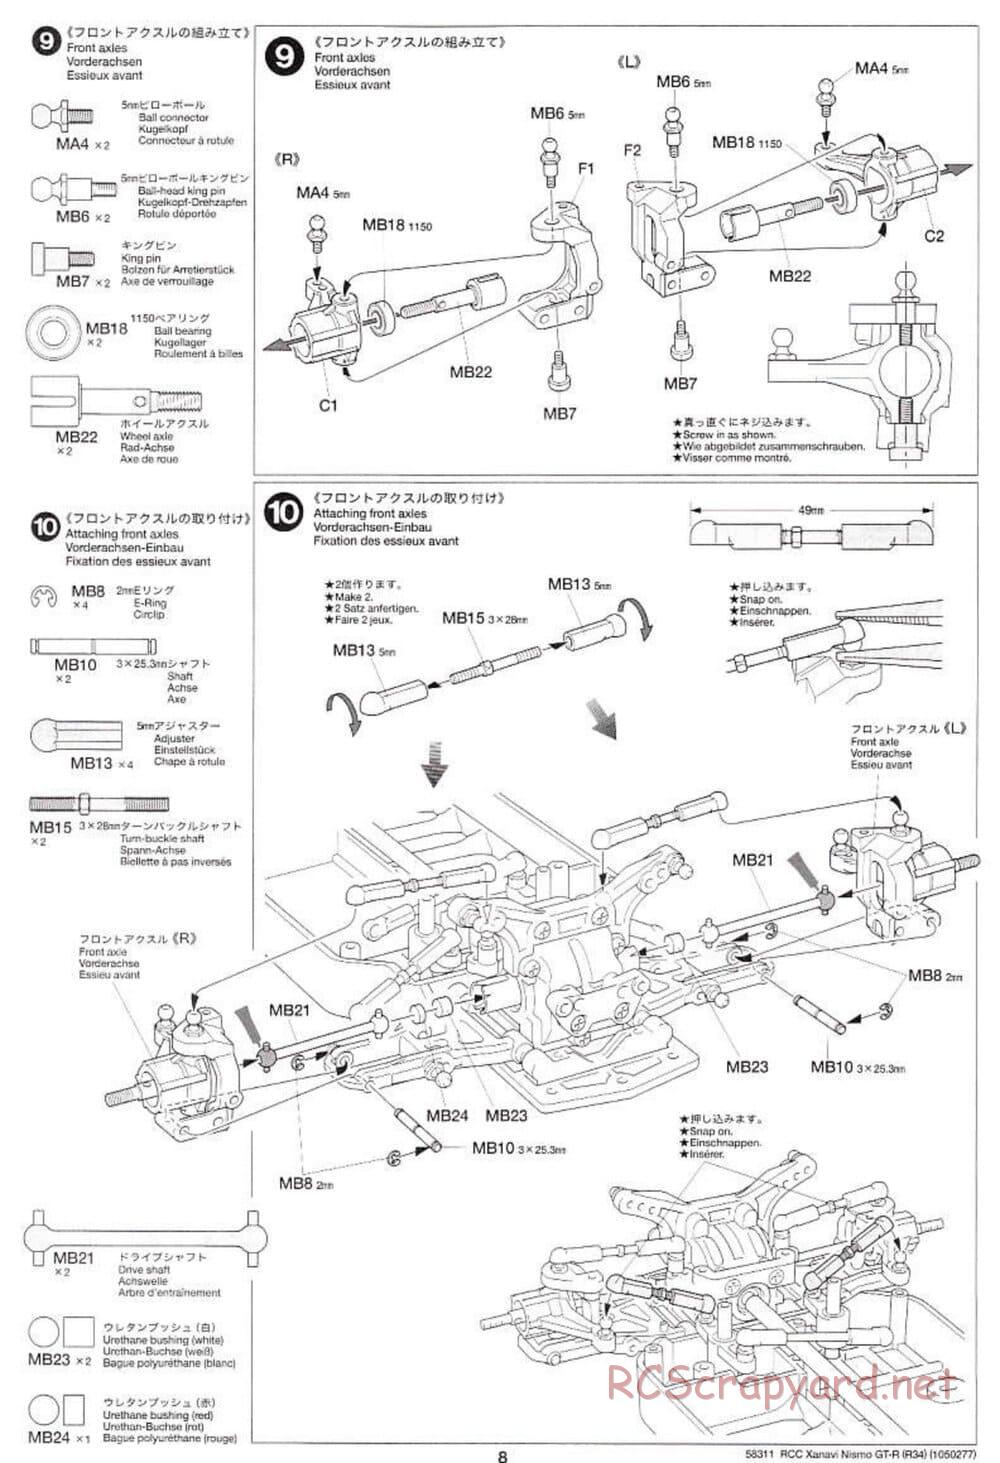 Tamiya - Xanavi Nismo GT-R (R34) - TB-02 Chassis - Manual - Page 8